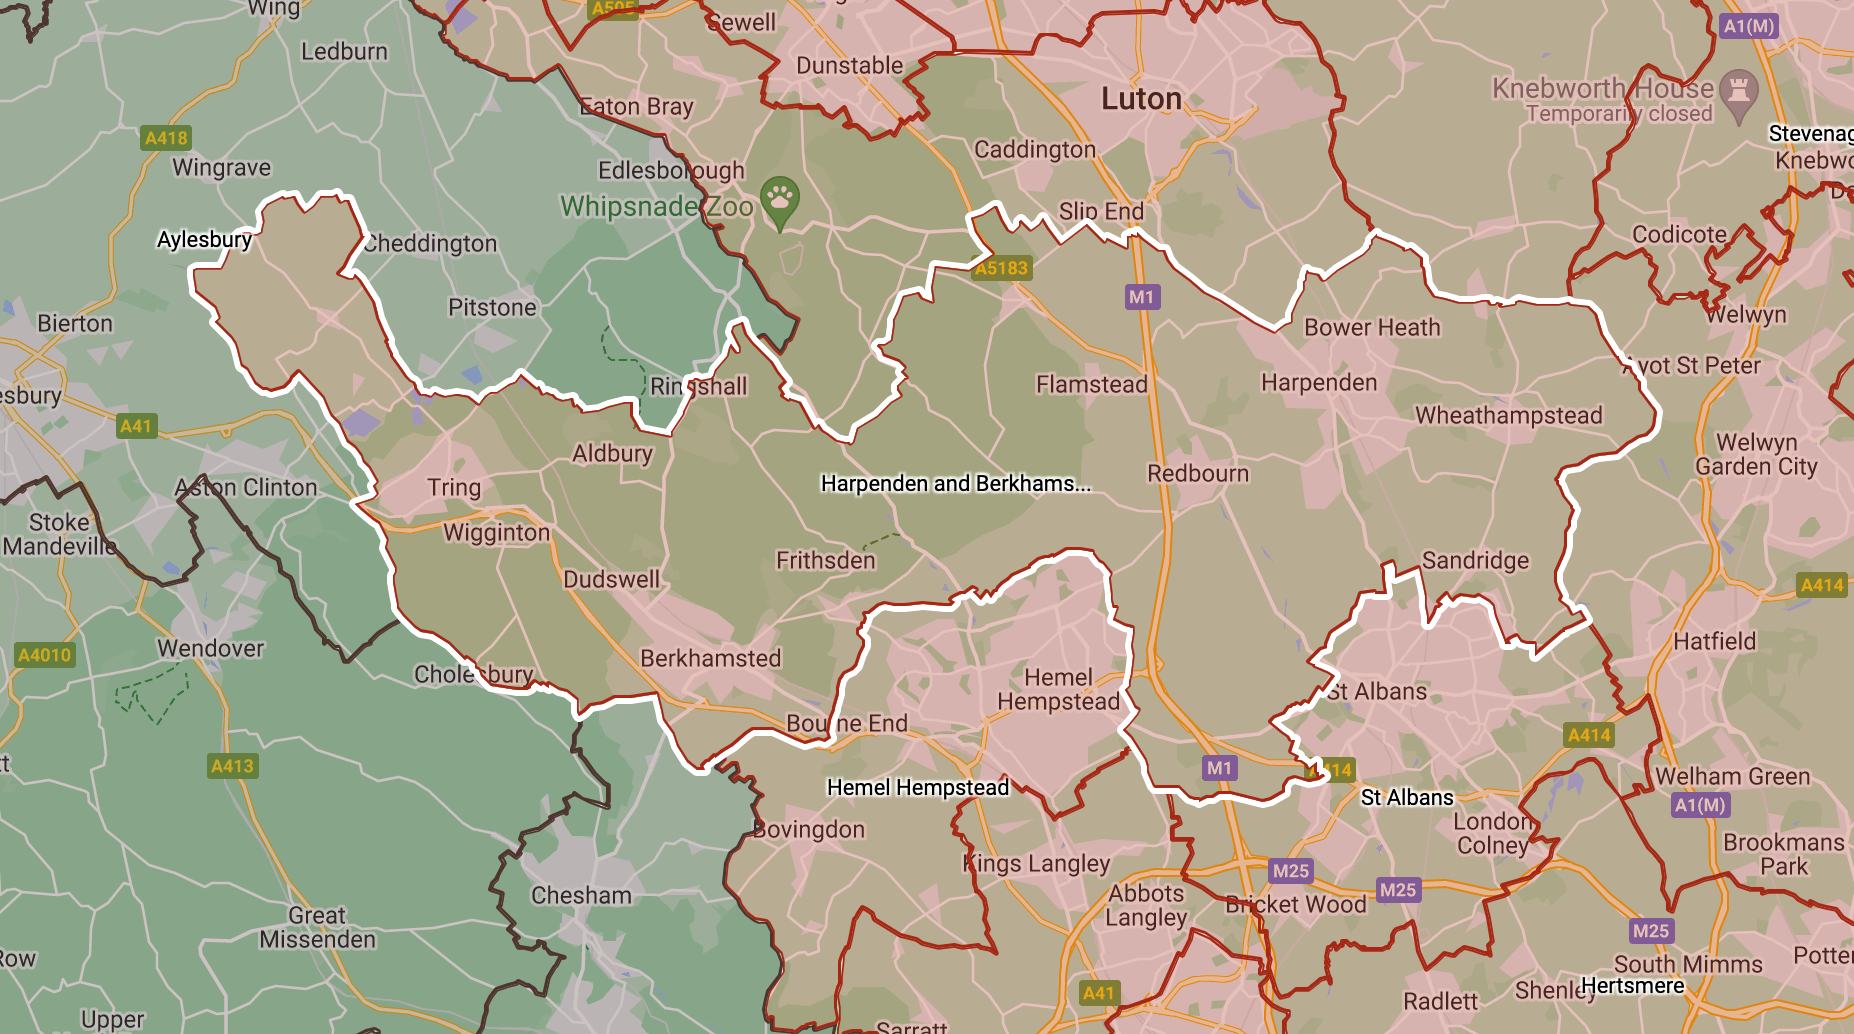 Harpenden & Berkhamsted Constituency